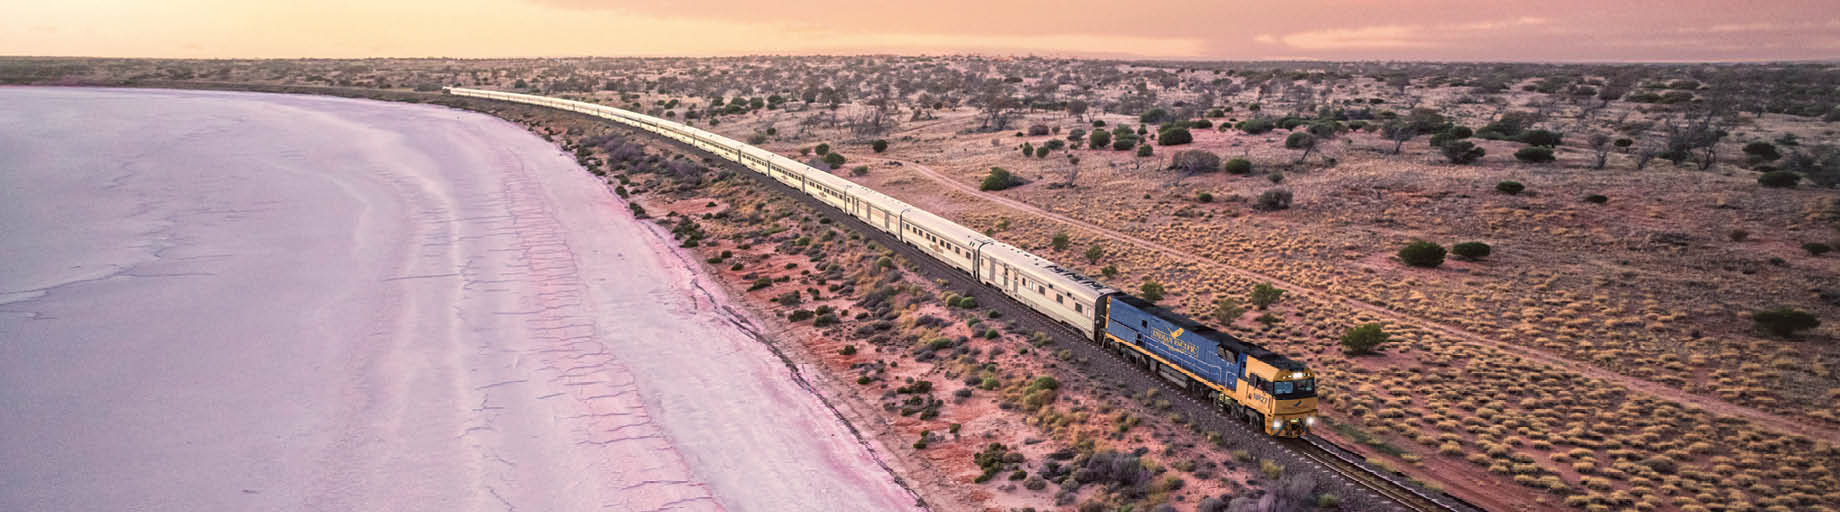 Indian Pacific Rail Journey and Western Australia Escape